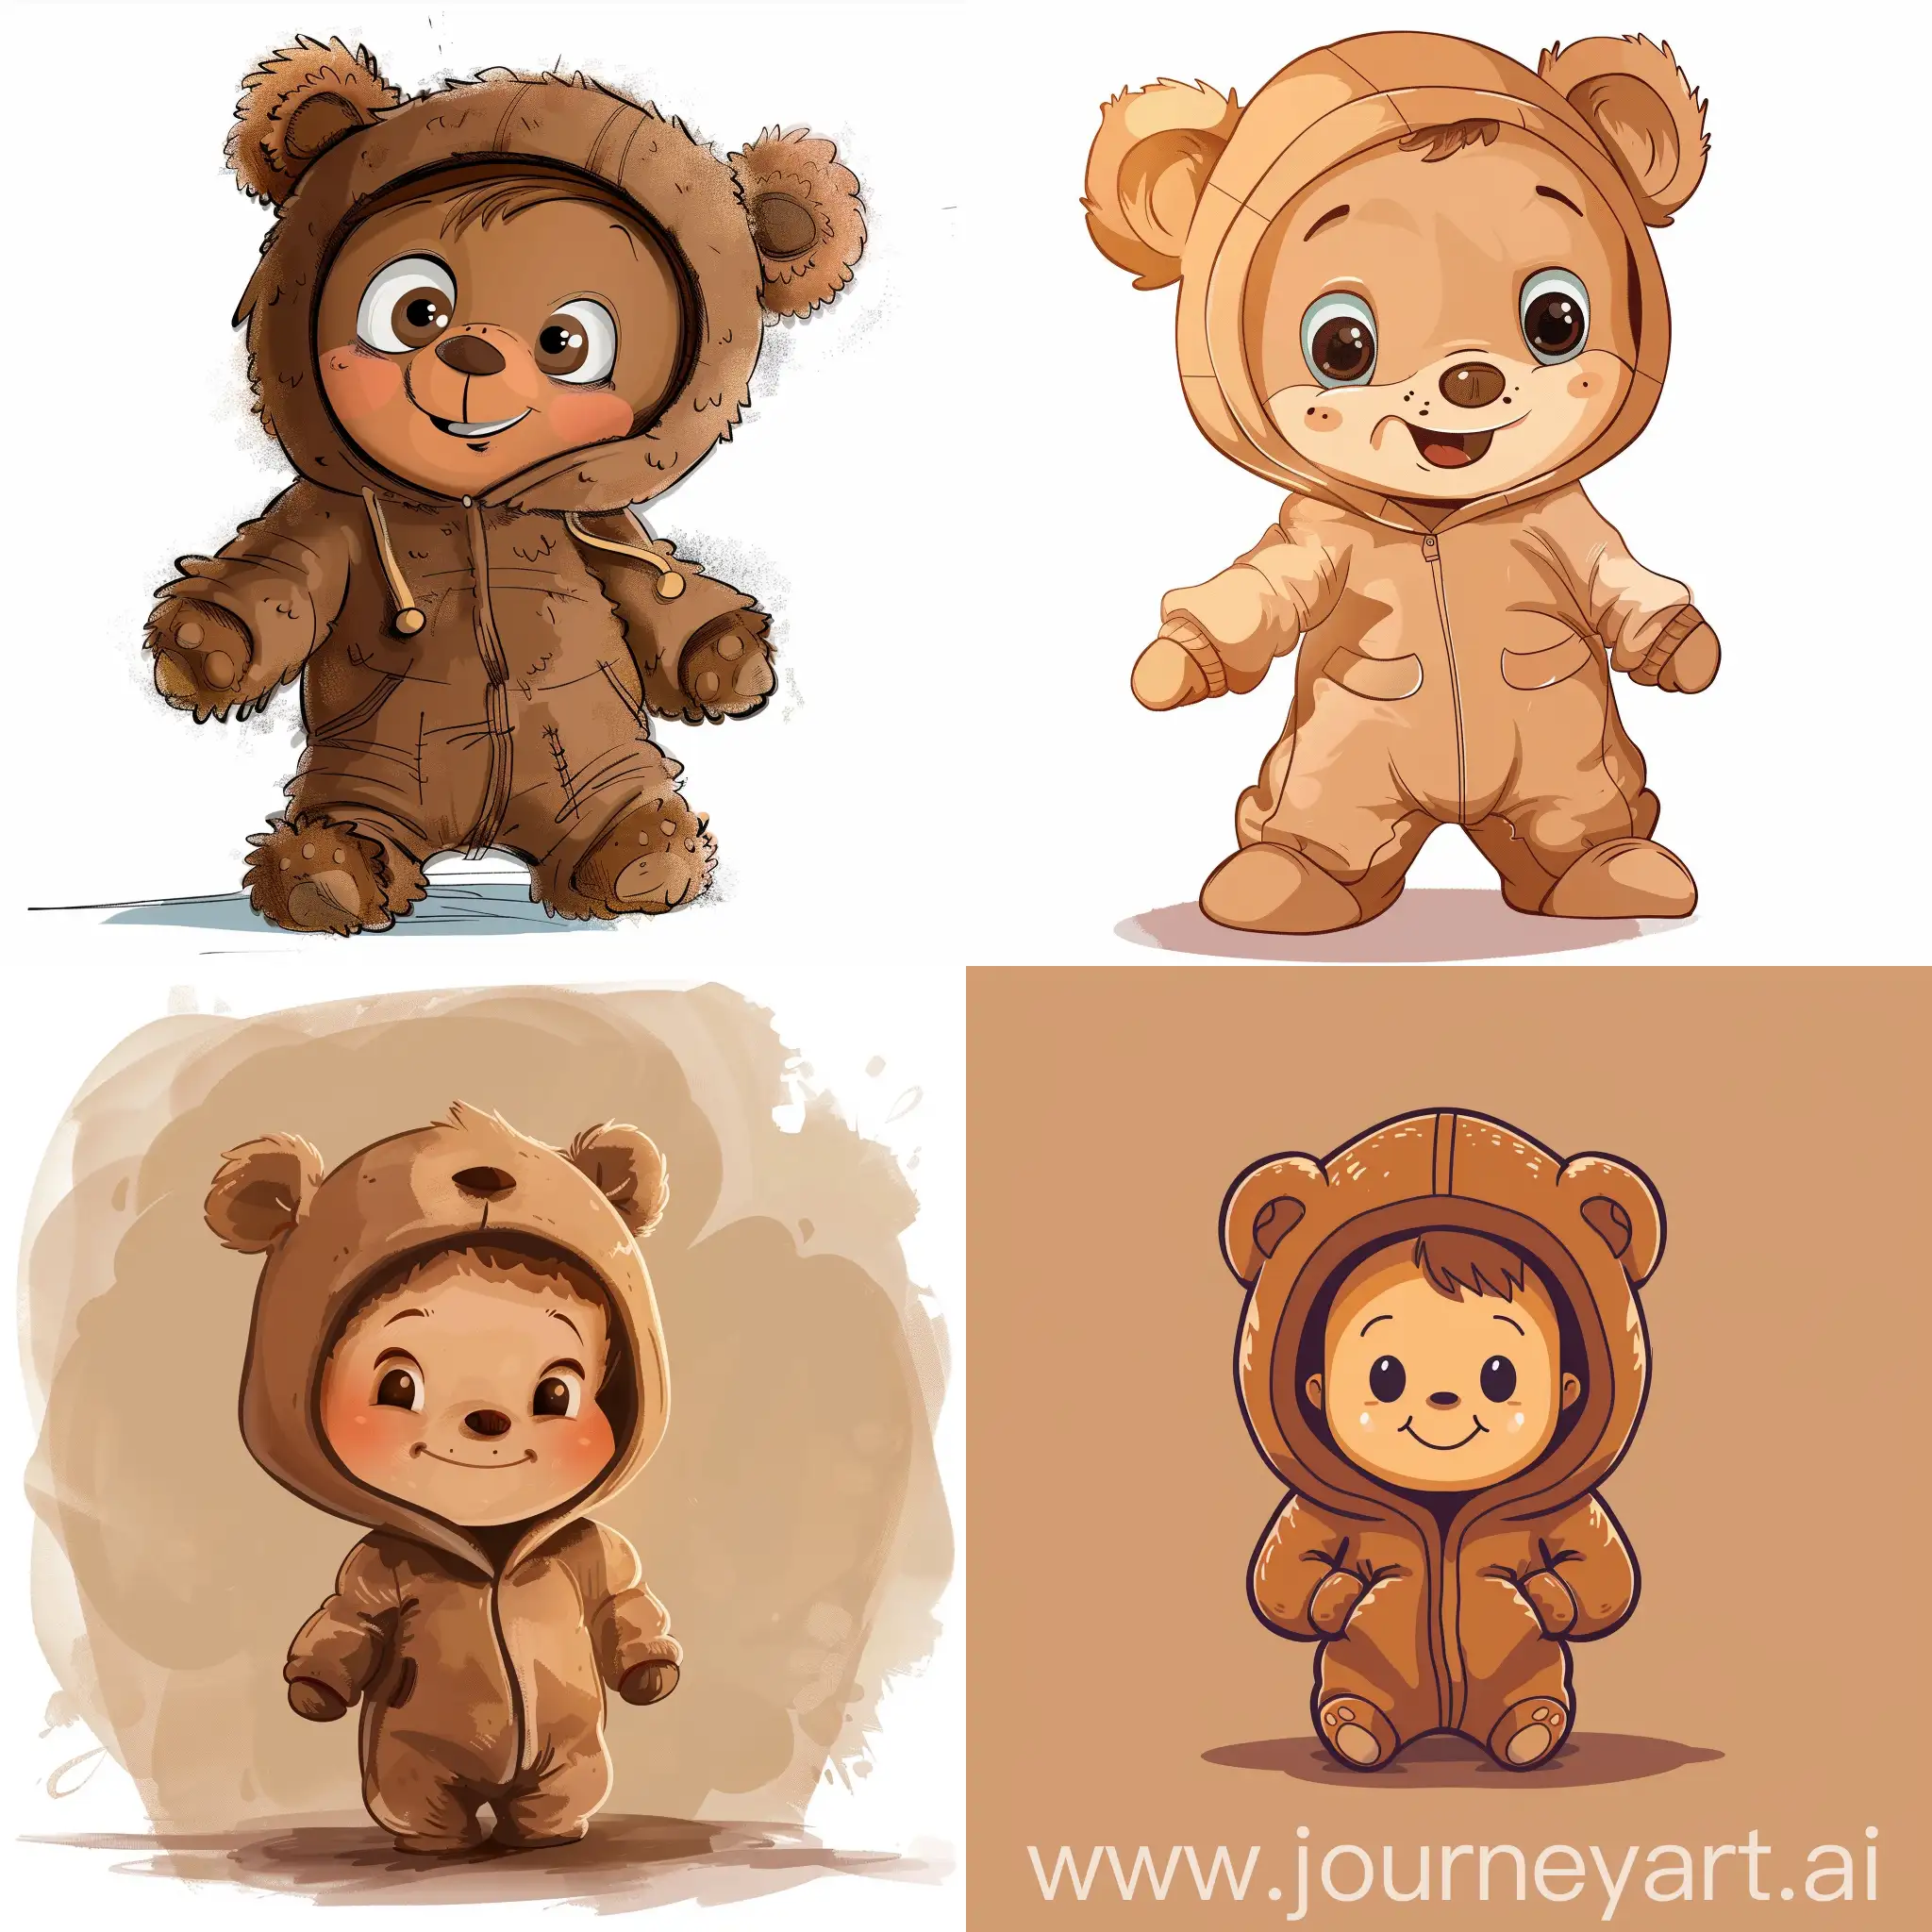 Cartoon of a baby bear in a bear suit 